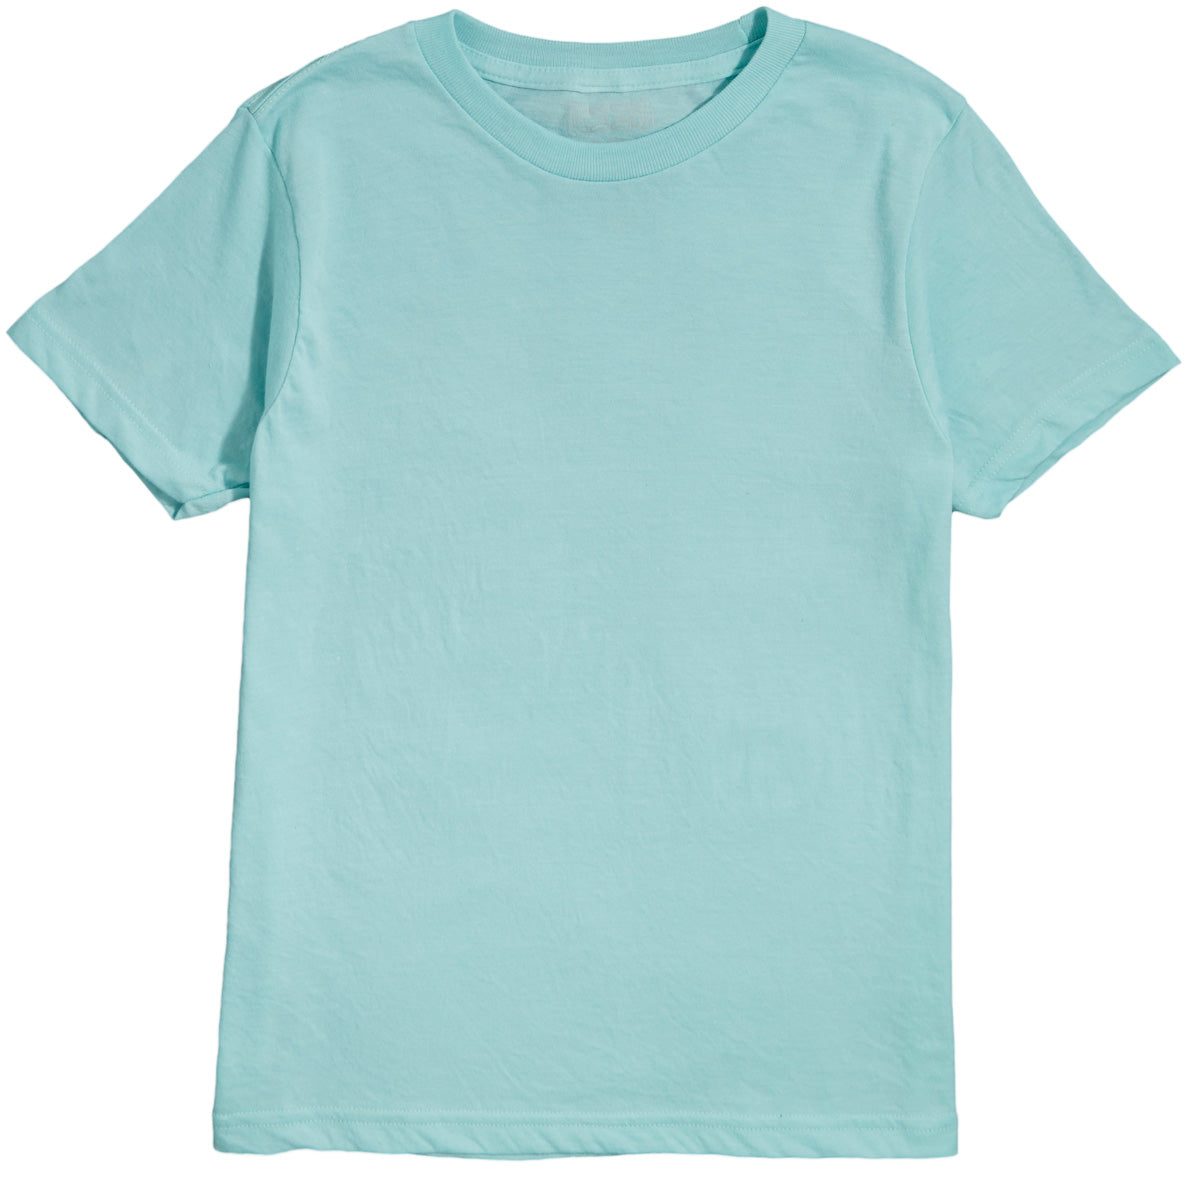 CCS Youth Basis T-Shirt - Light Blue image 1